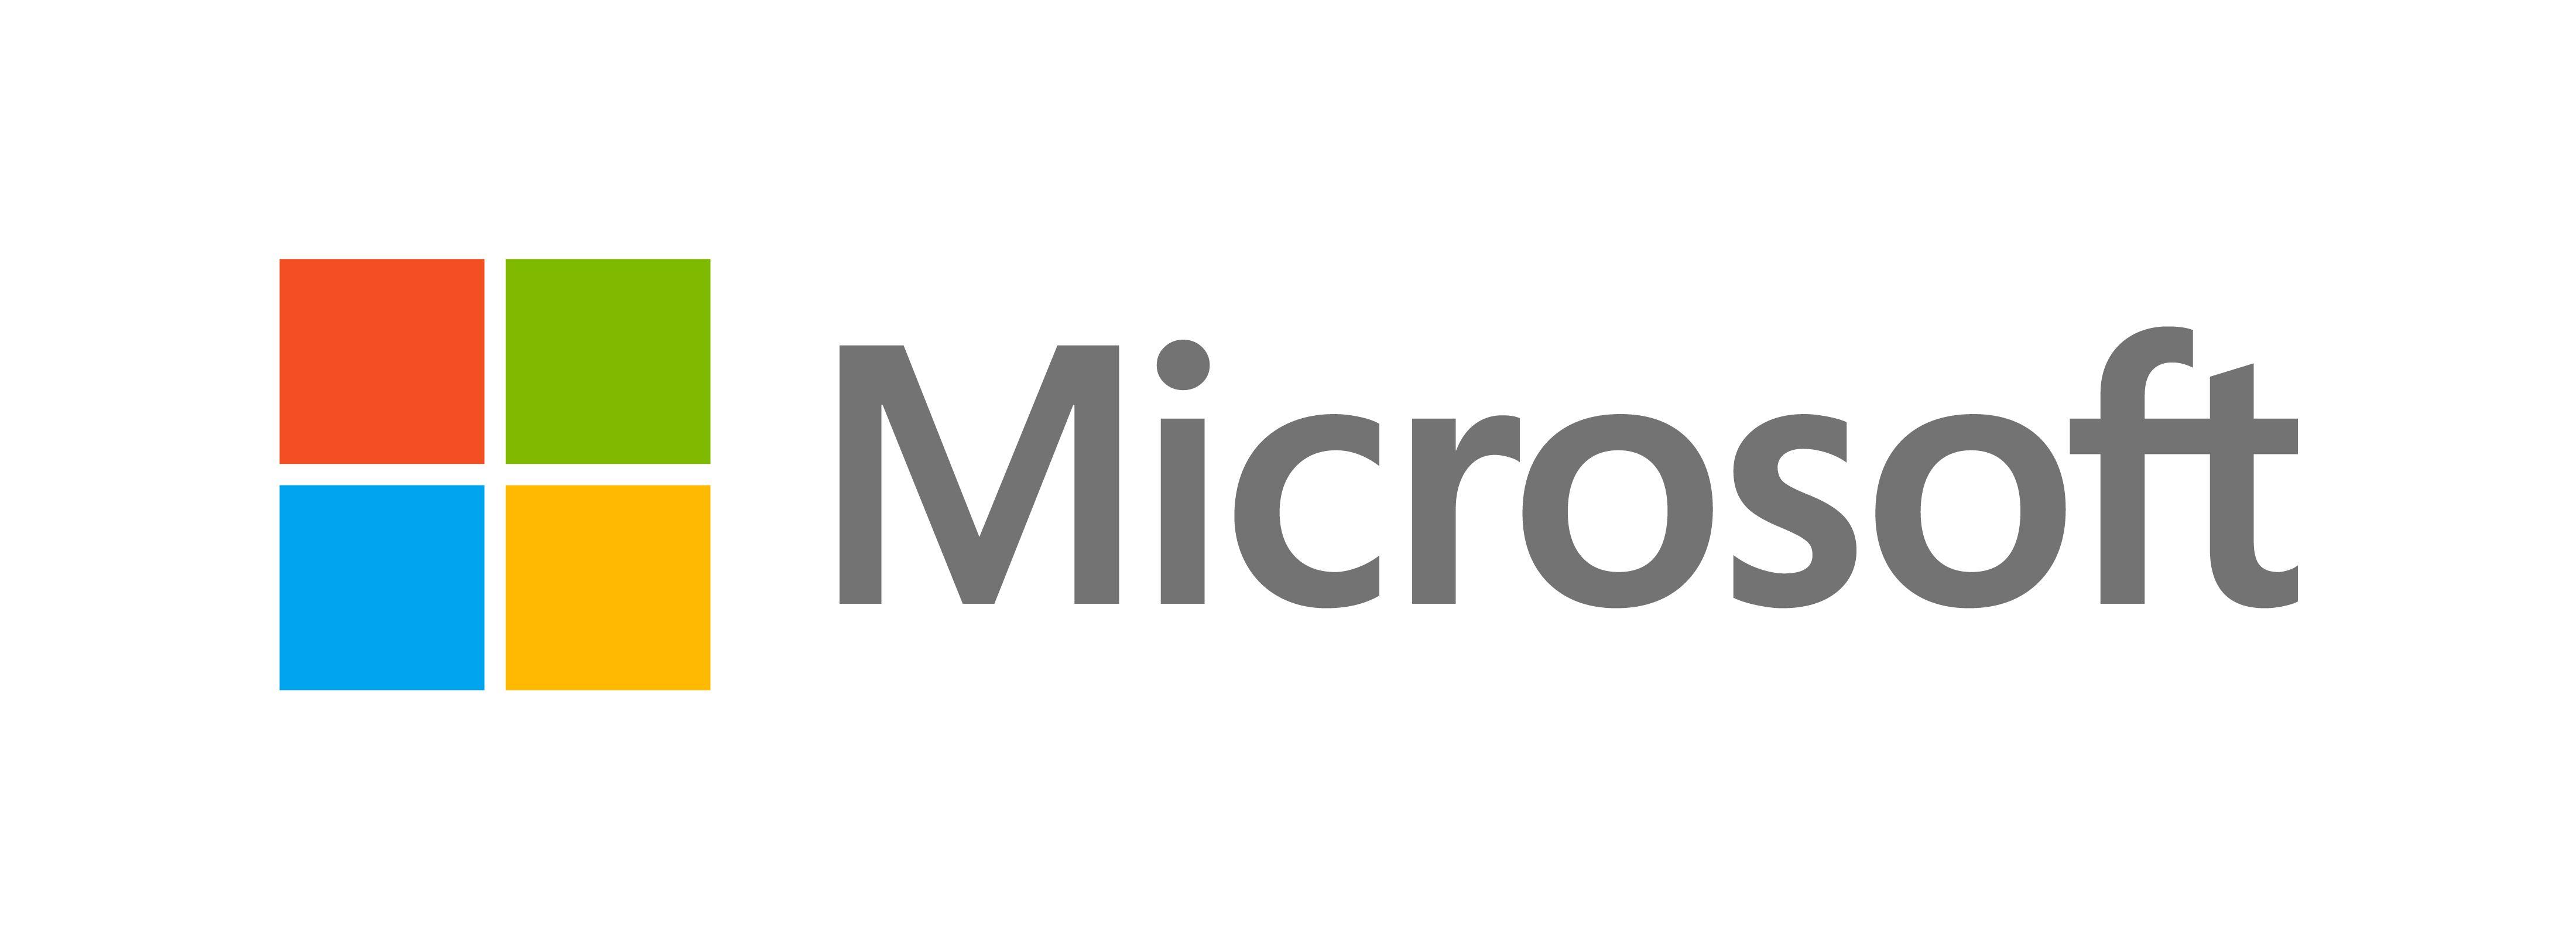 Microsoft Teams Logo - The Official Microsoft Blog